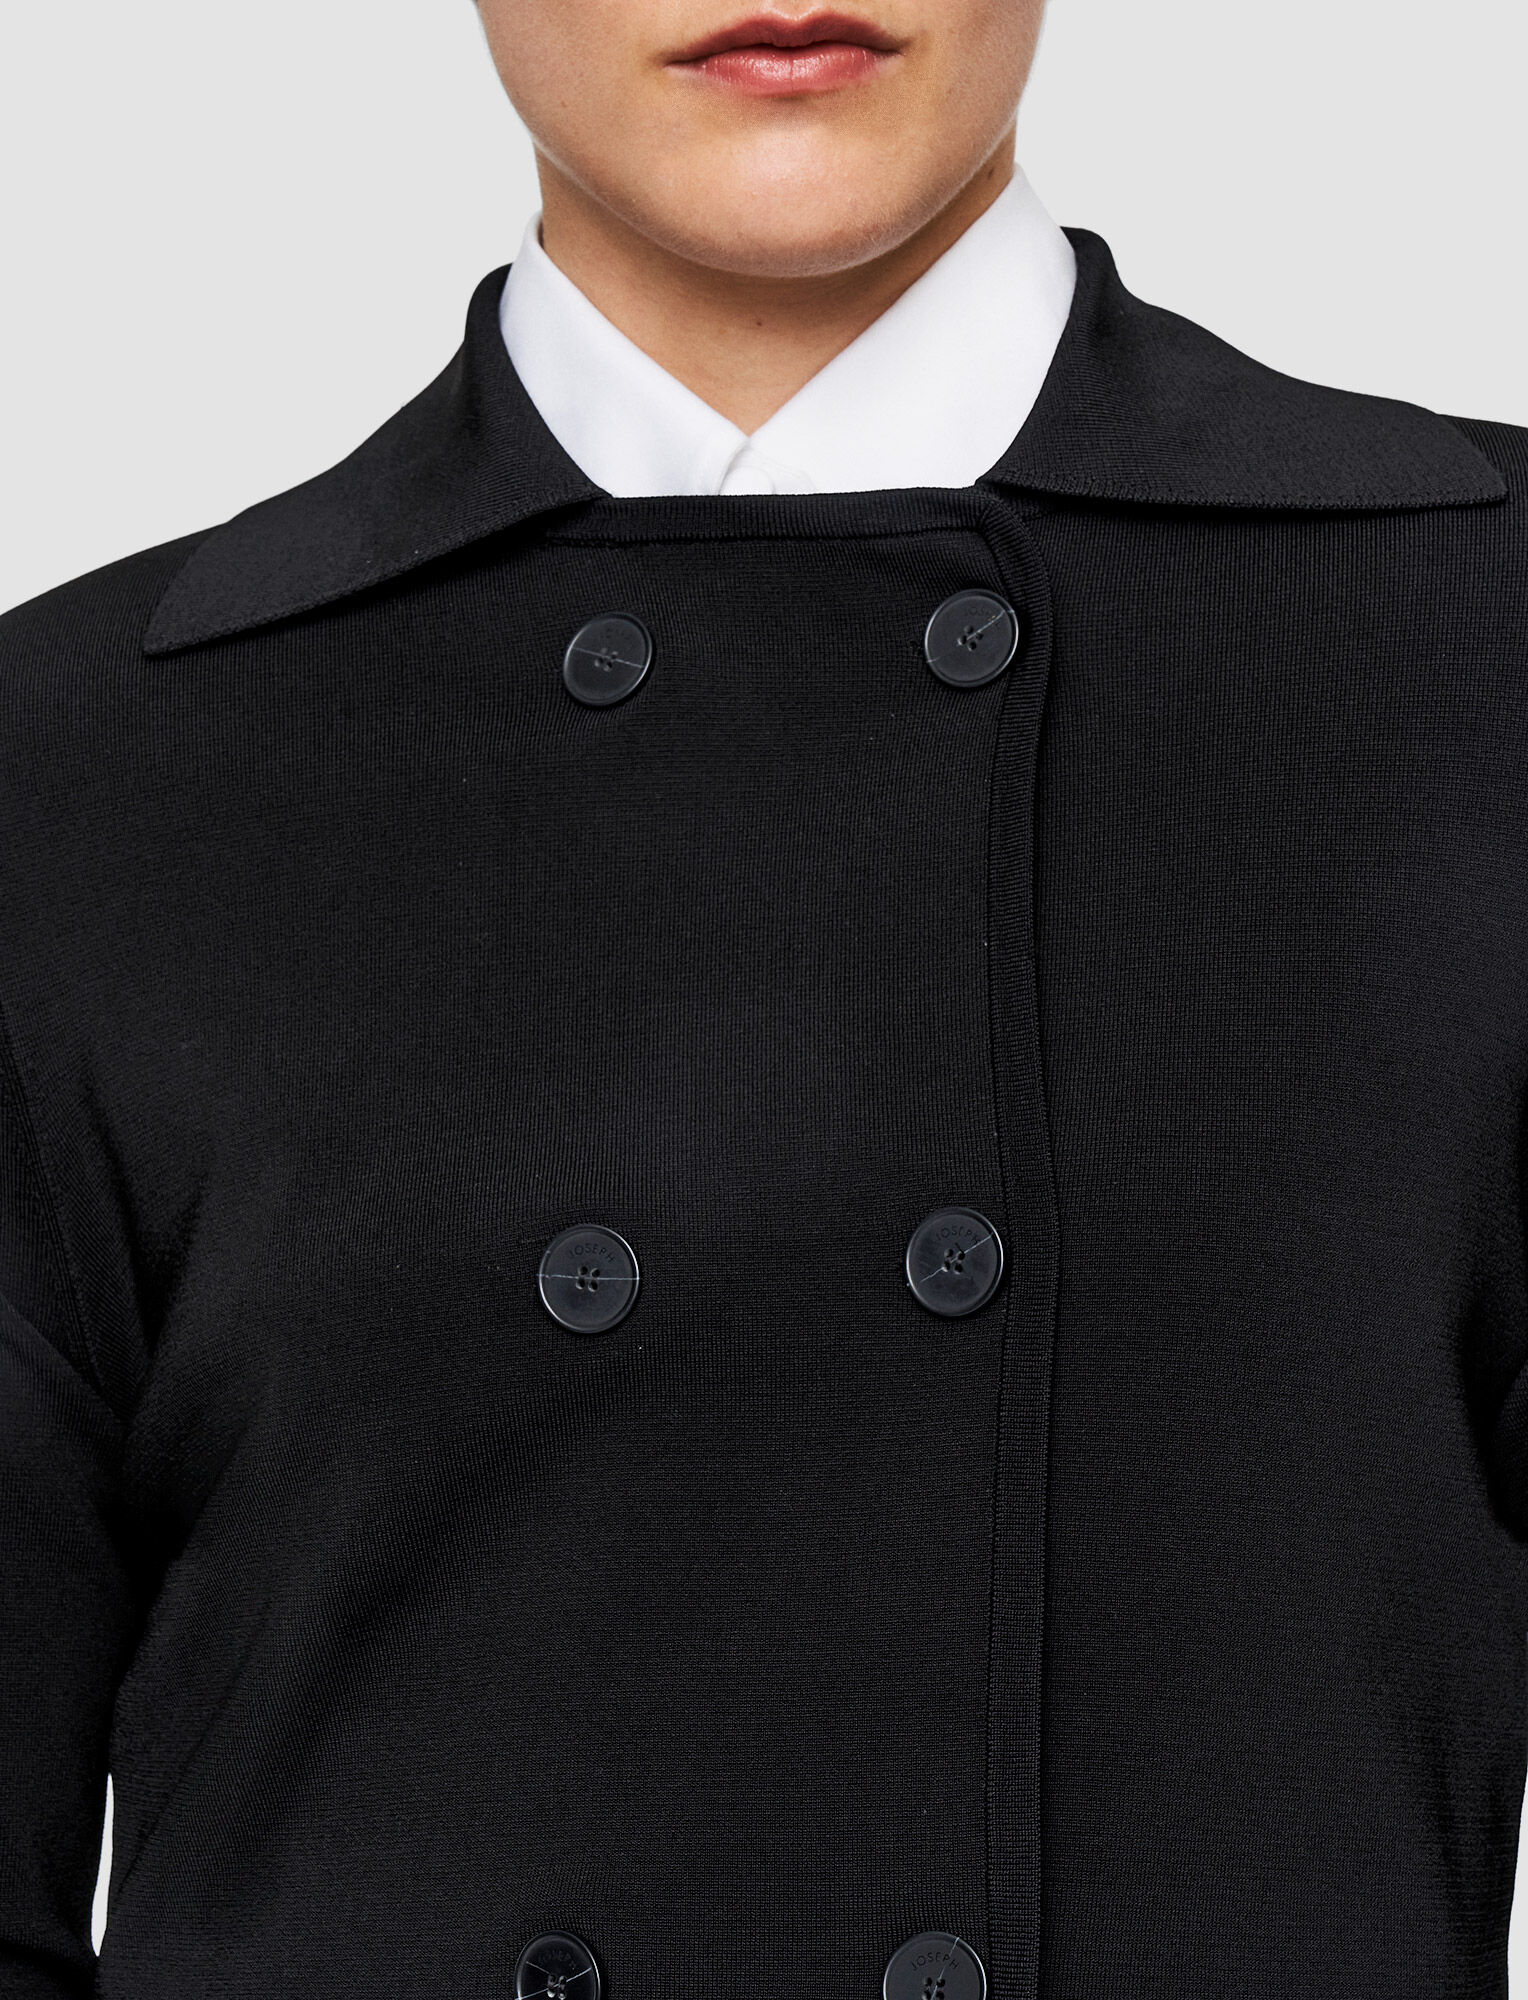 Joseph, Milano Knitted Short Jacket, in Black